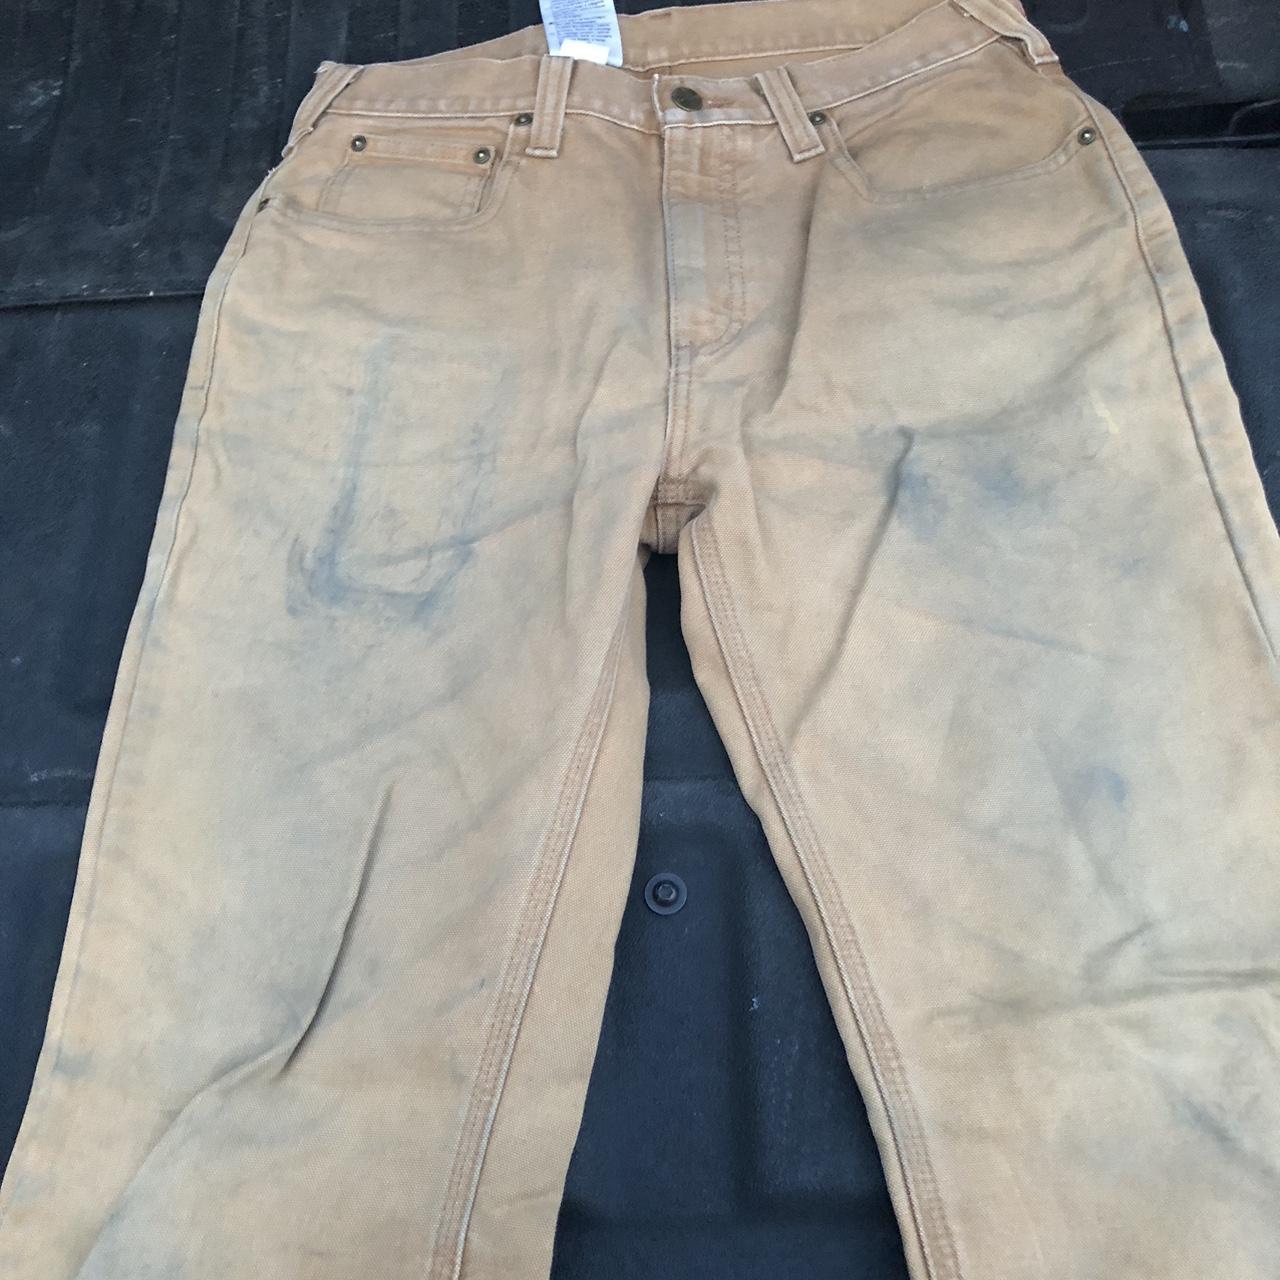 Vintage Distressed carhartt Pants size 30x32... - Depop